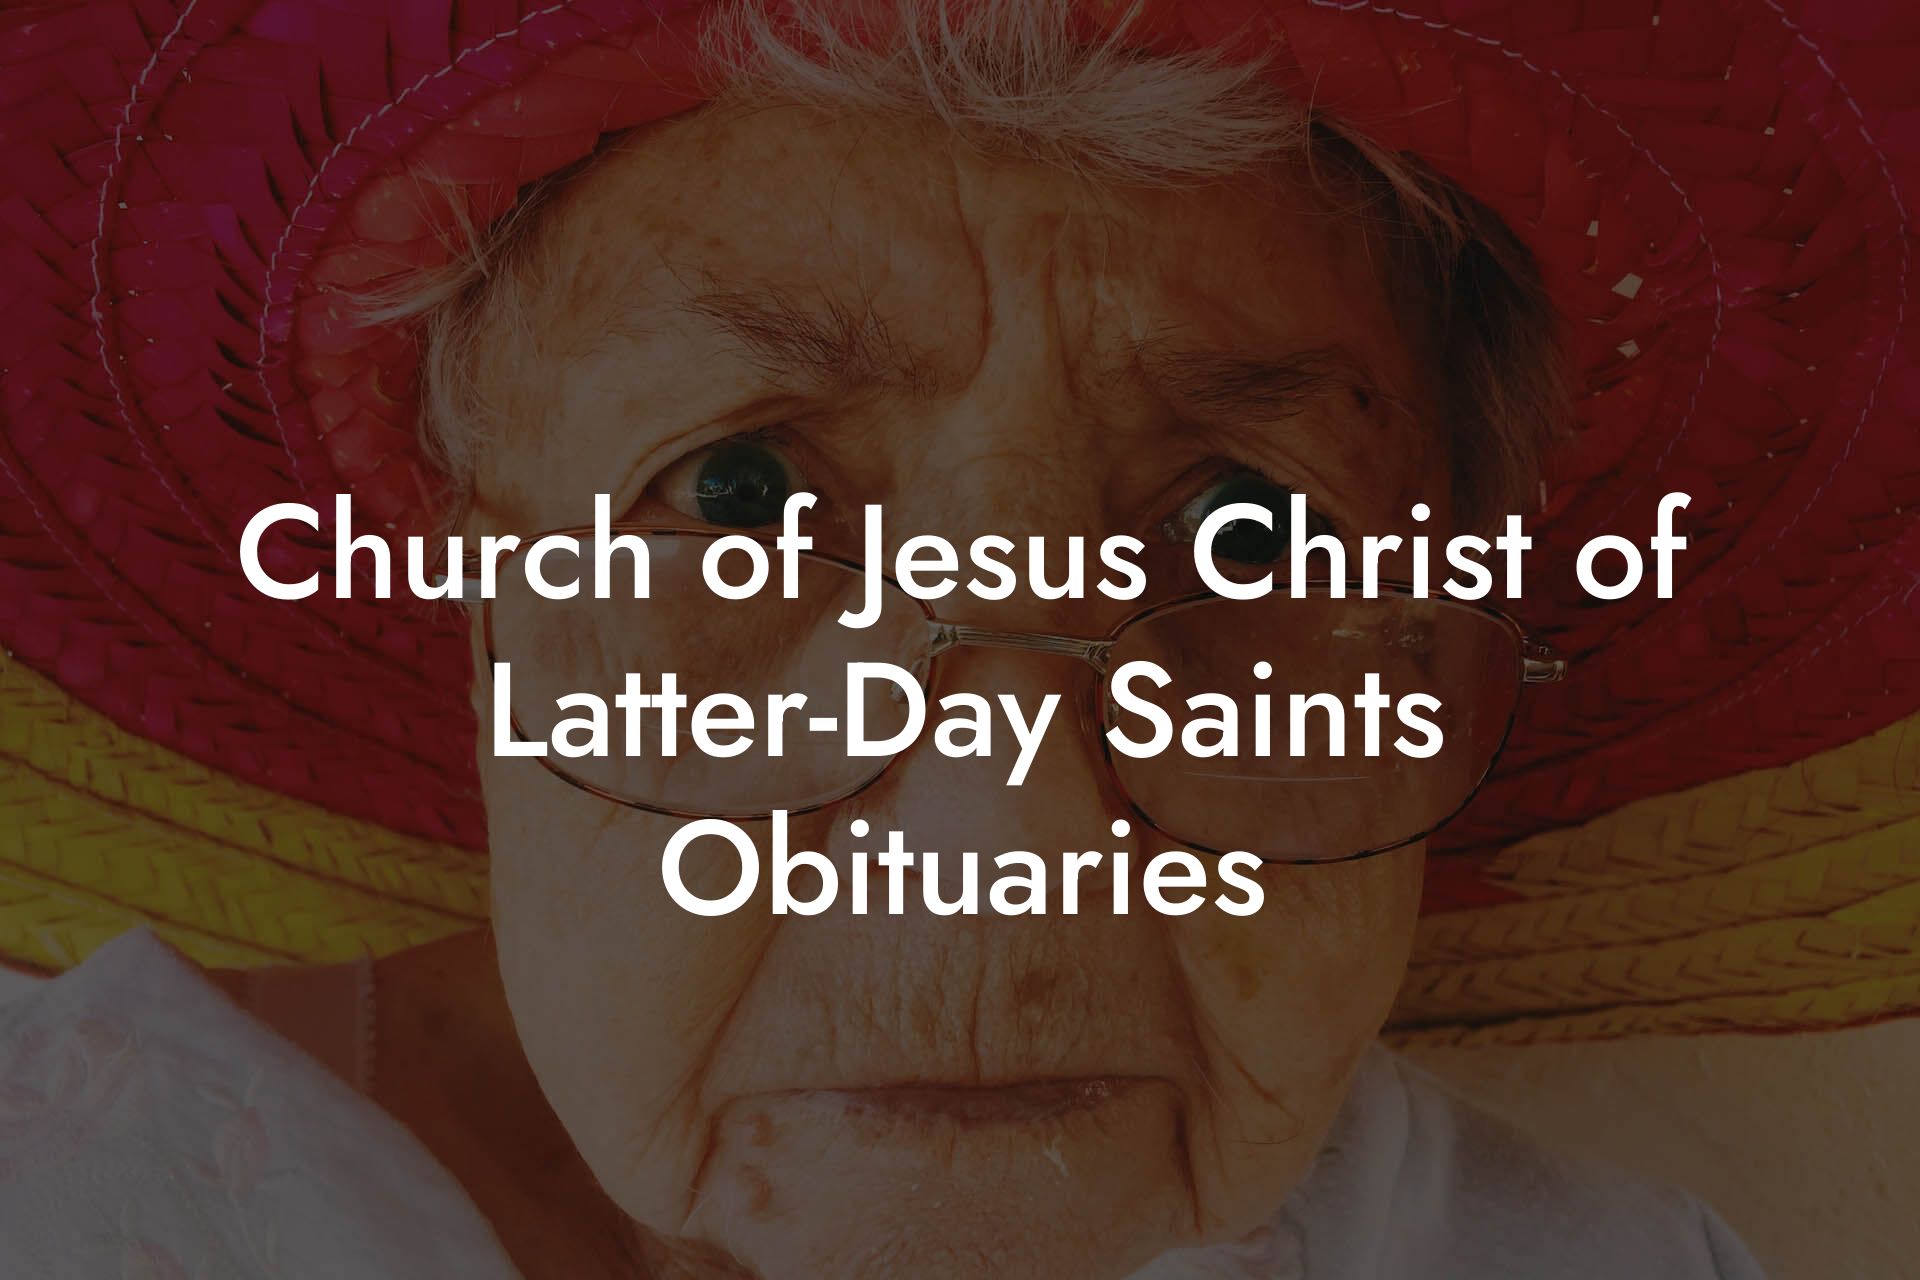 Church of Jesus Christ of Latter-Day Saints Obituaries